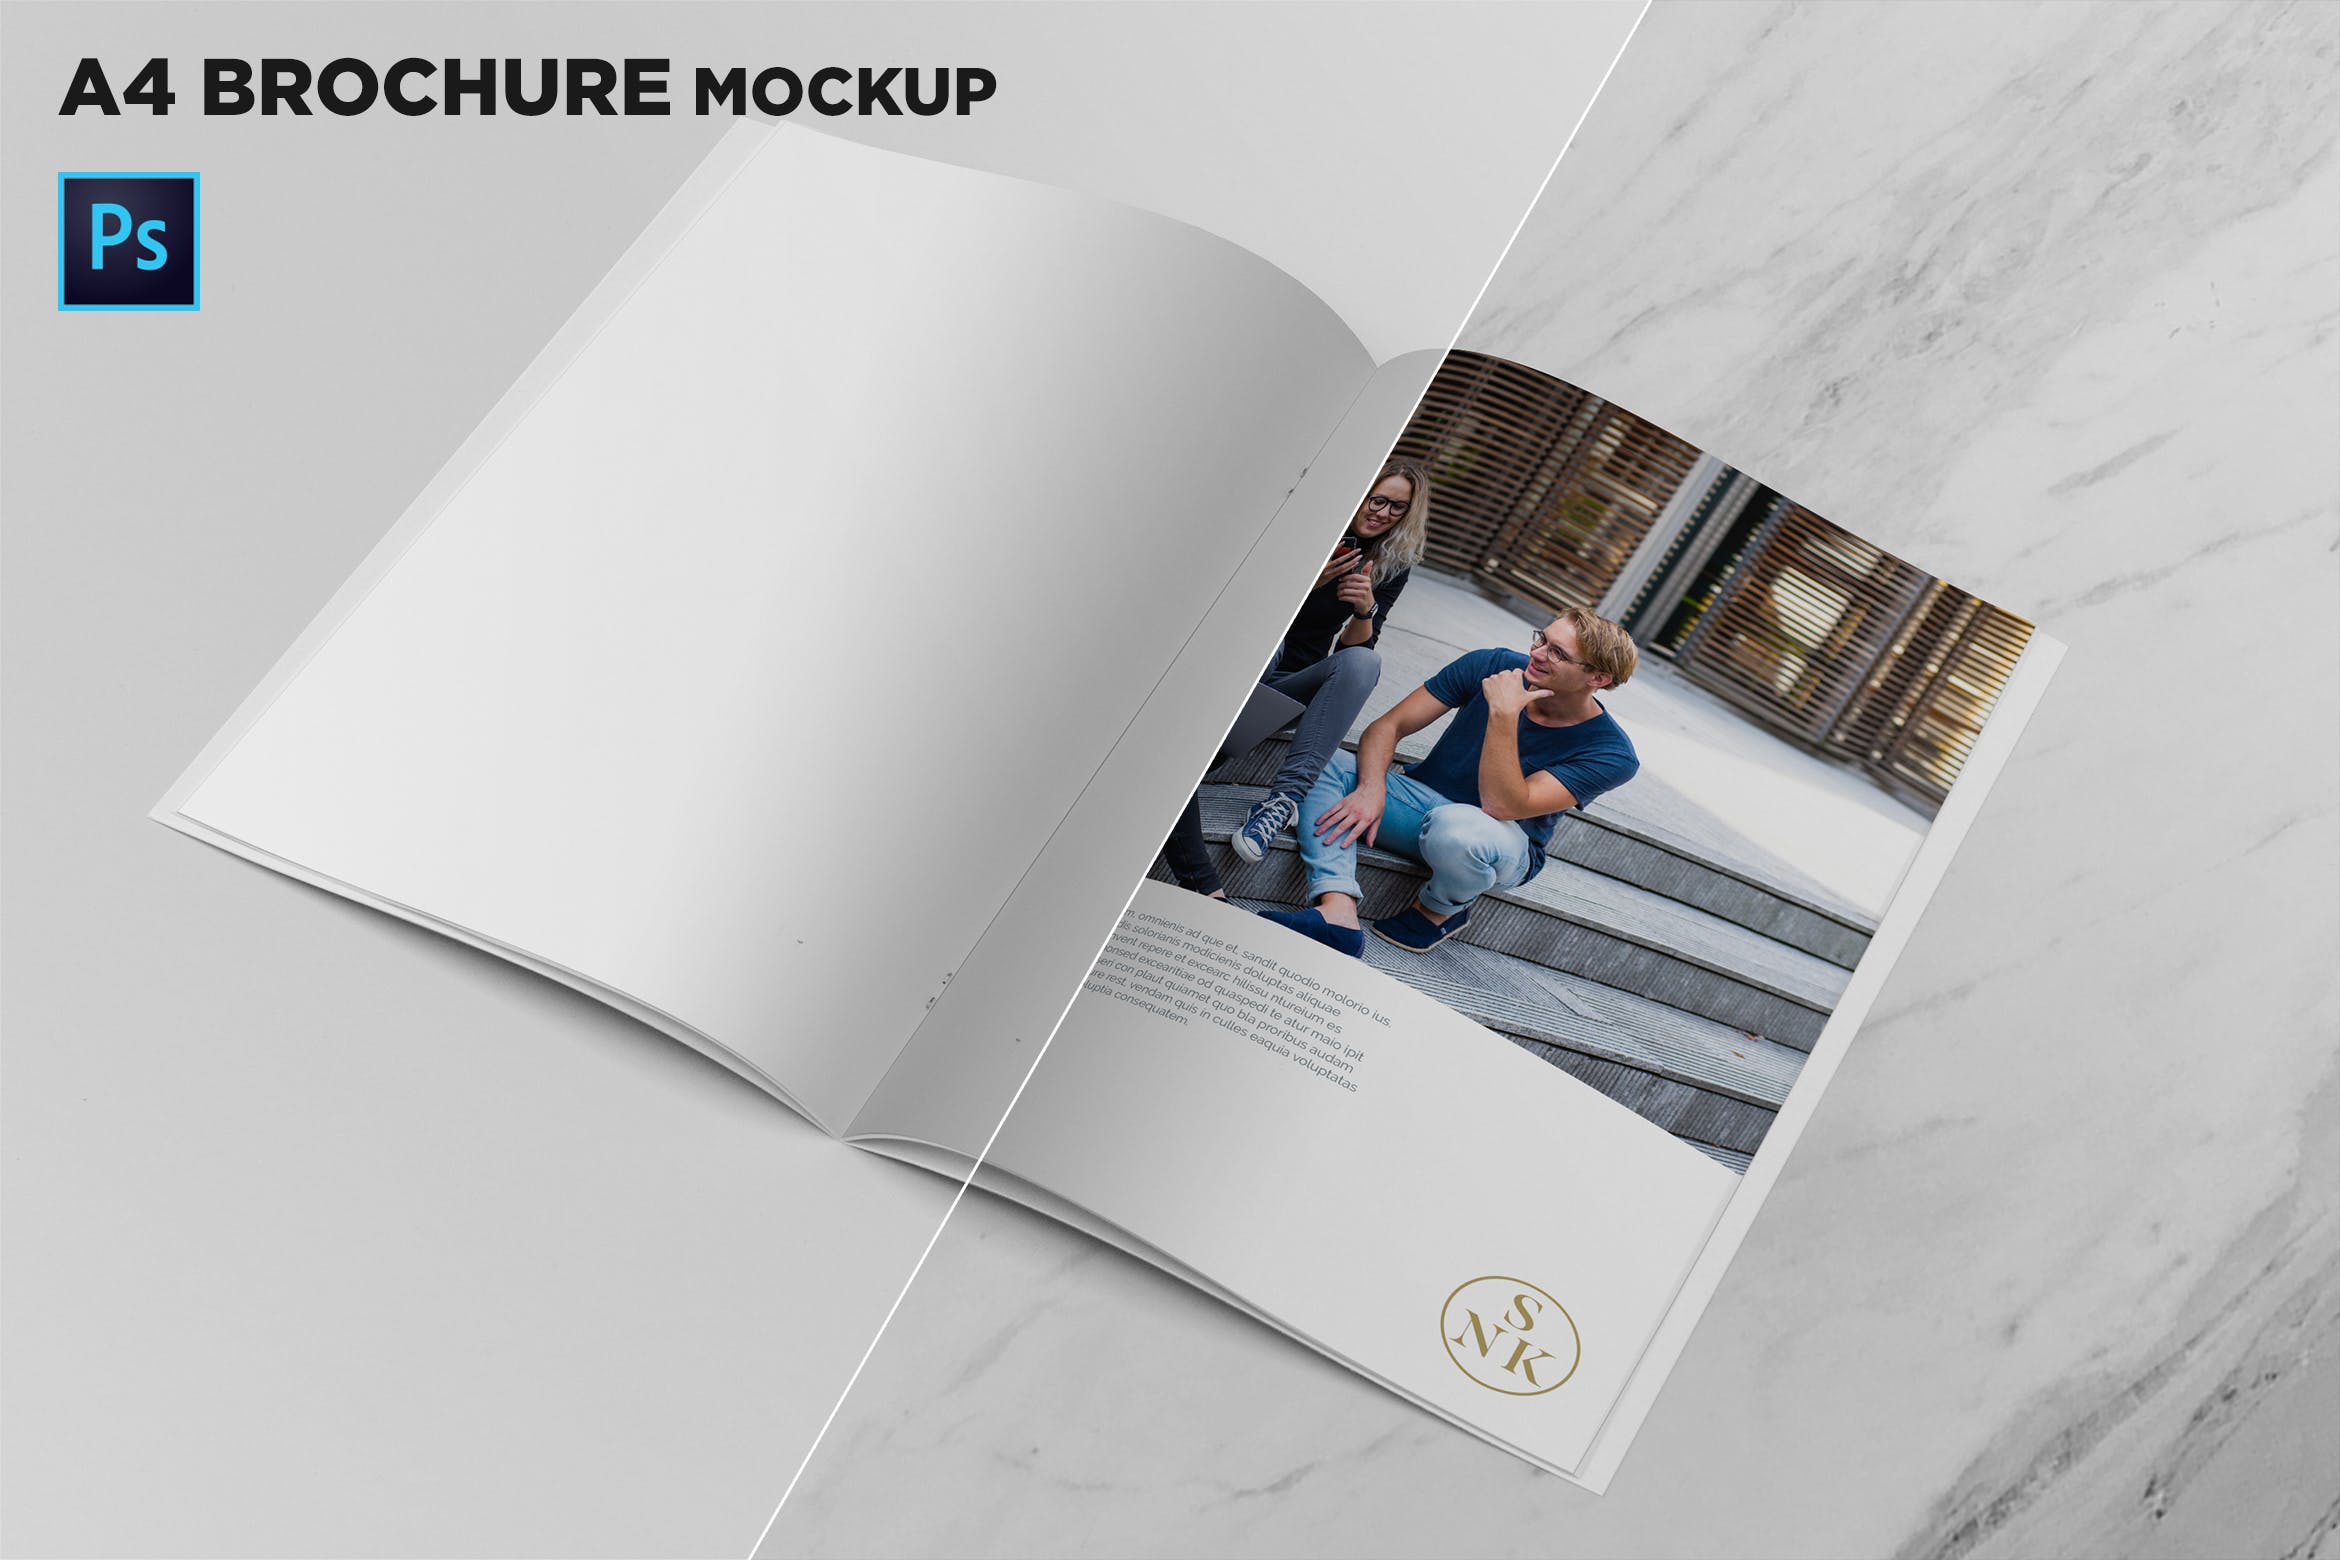 A4宣传小册子/企业画册内页排版设计效果图样机16设计网精选 A4 Brochure Mockup Open Pages插图